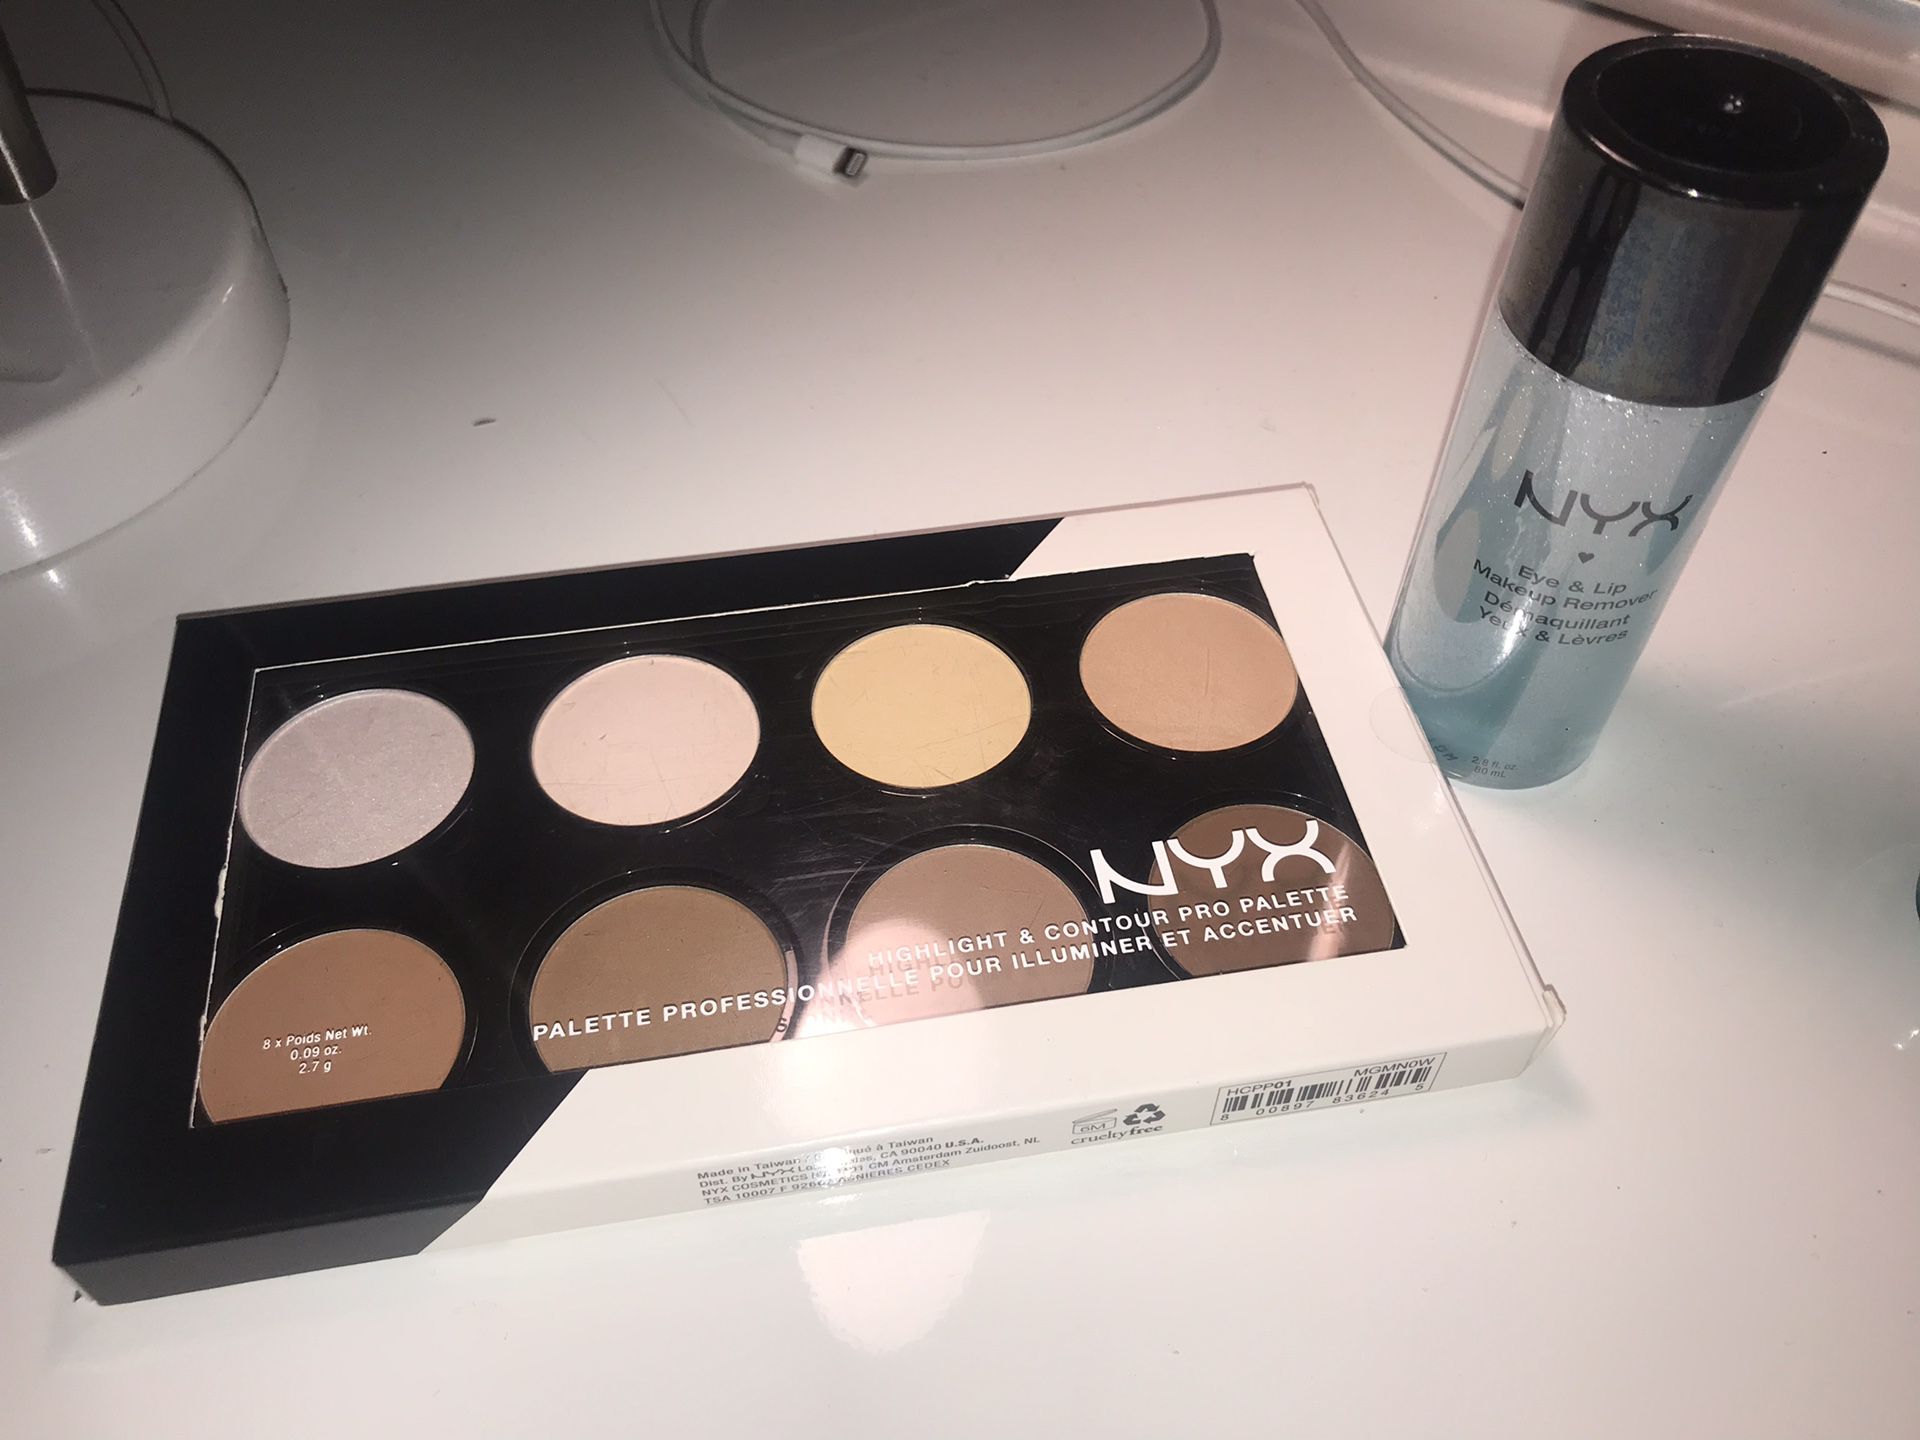 NYX eye & lip makeup remover + NYX highlight & contour pro palette